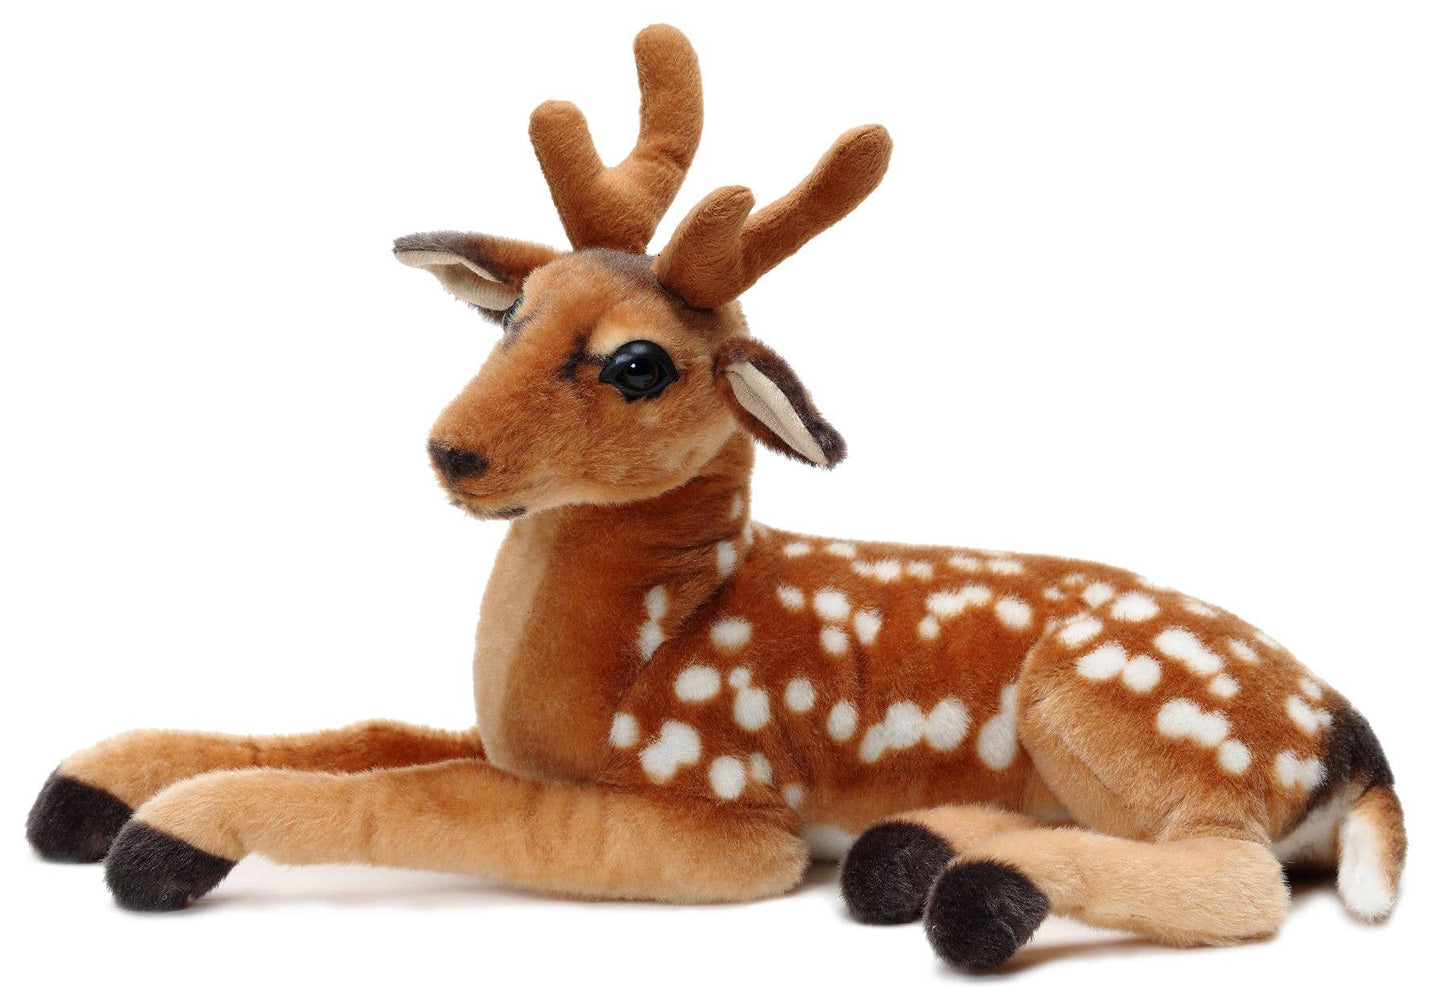 Dorbin the Deer Stuffed Animal Plush